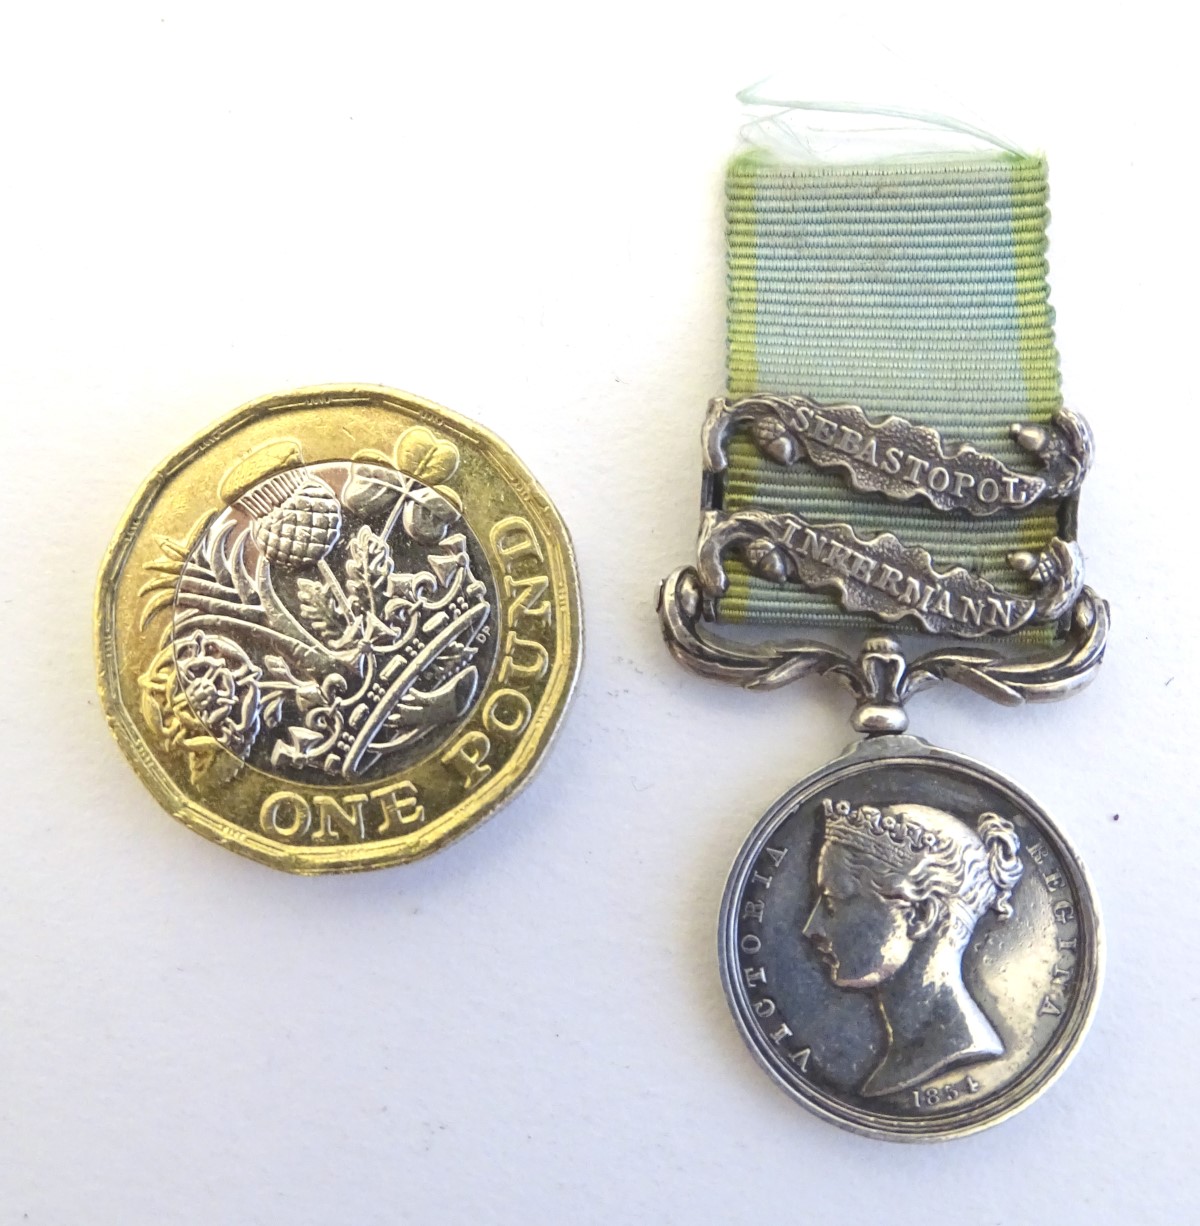 Militaria: a Victorian miniature Crimea Medal, with Sebastopol and Inkermann bars. 2" long ( - Image 4 of 7